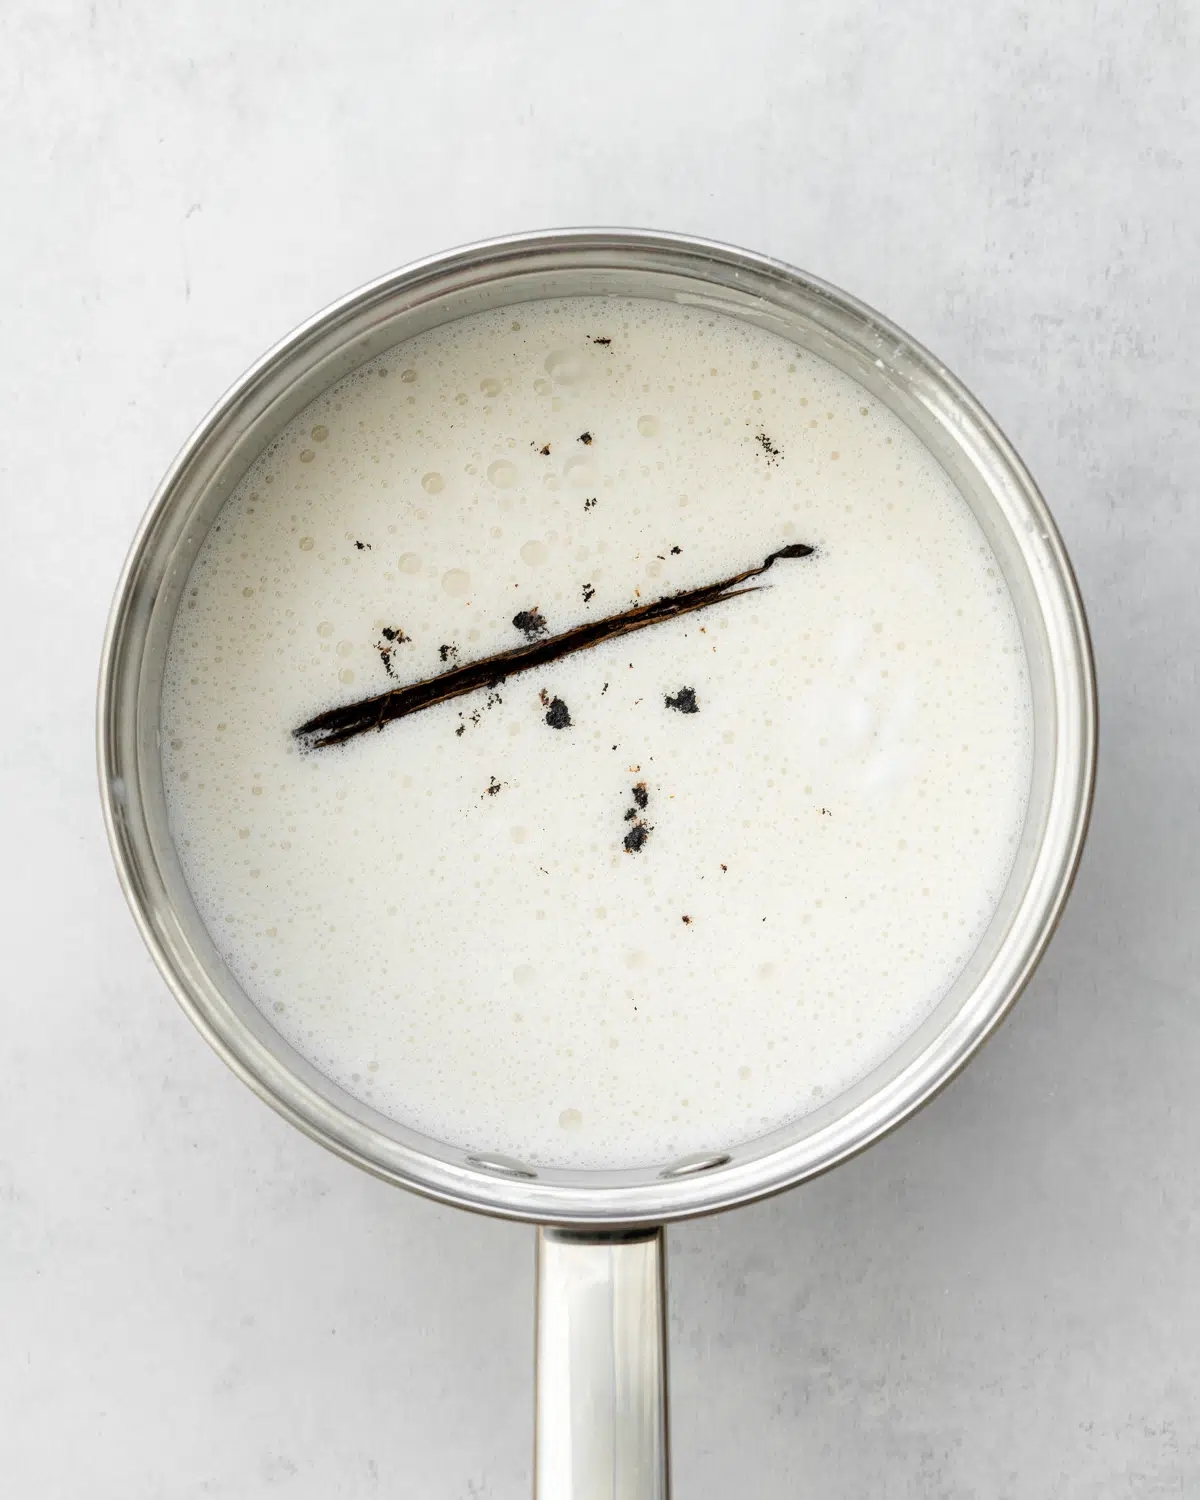 milk and vanilla pod in saucepan.